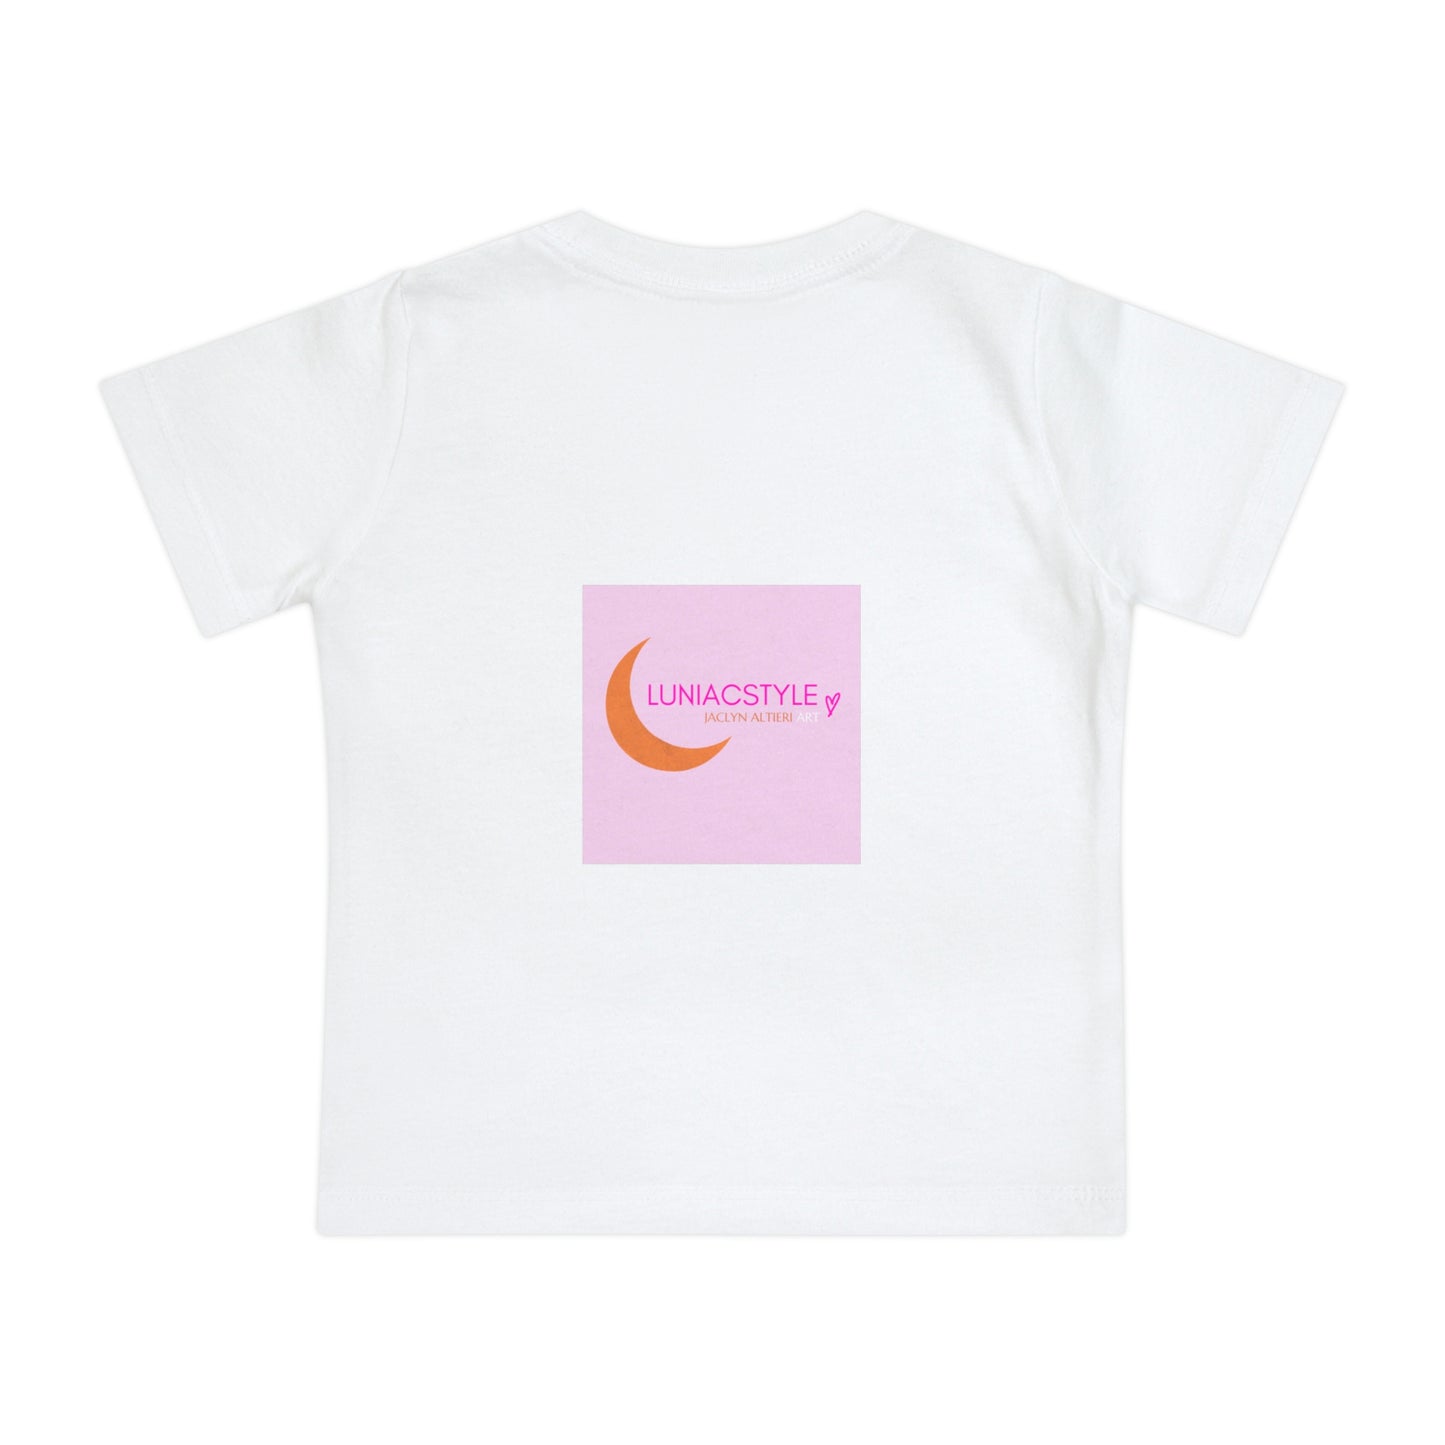 "2 AMERICAN GIRLS IN PARIS" Girl Talk Art Baby Short Sleeve T-Shirt